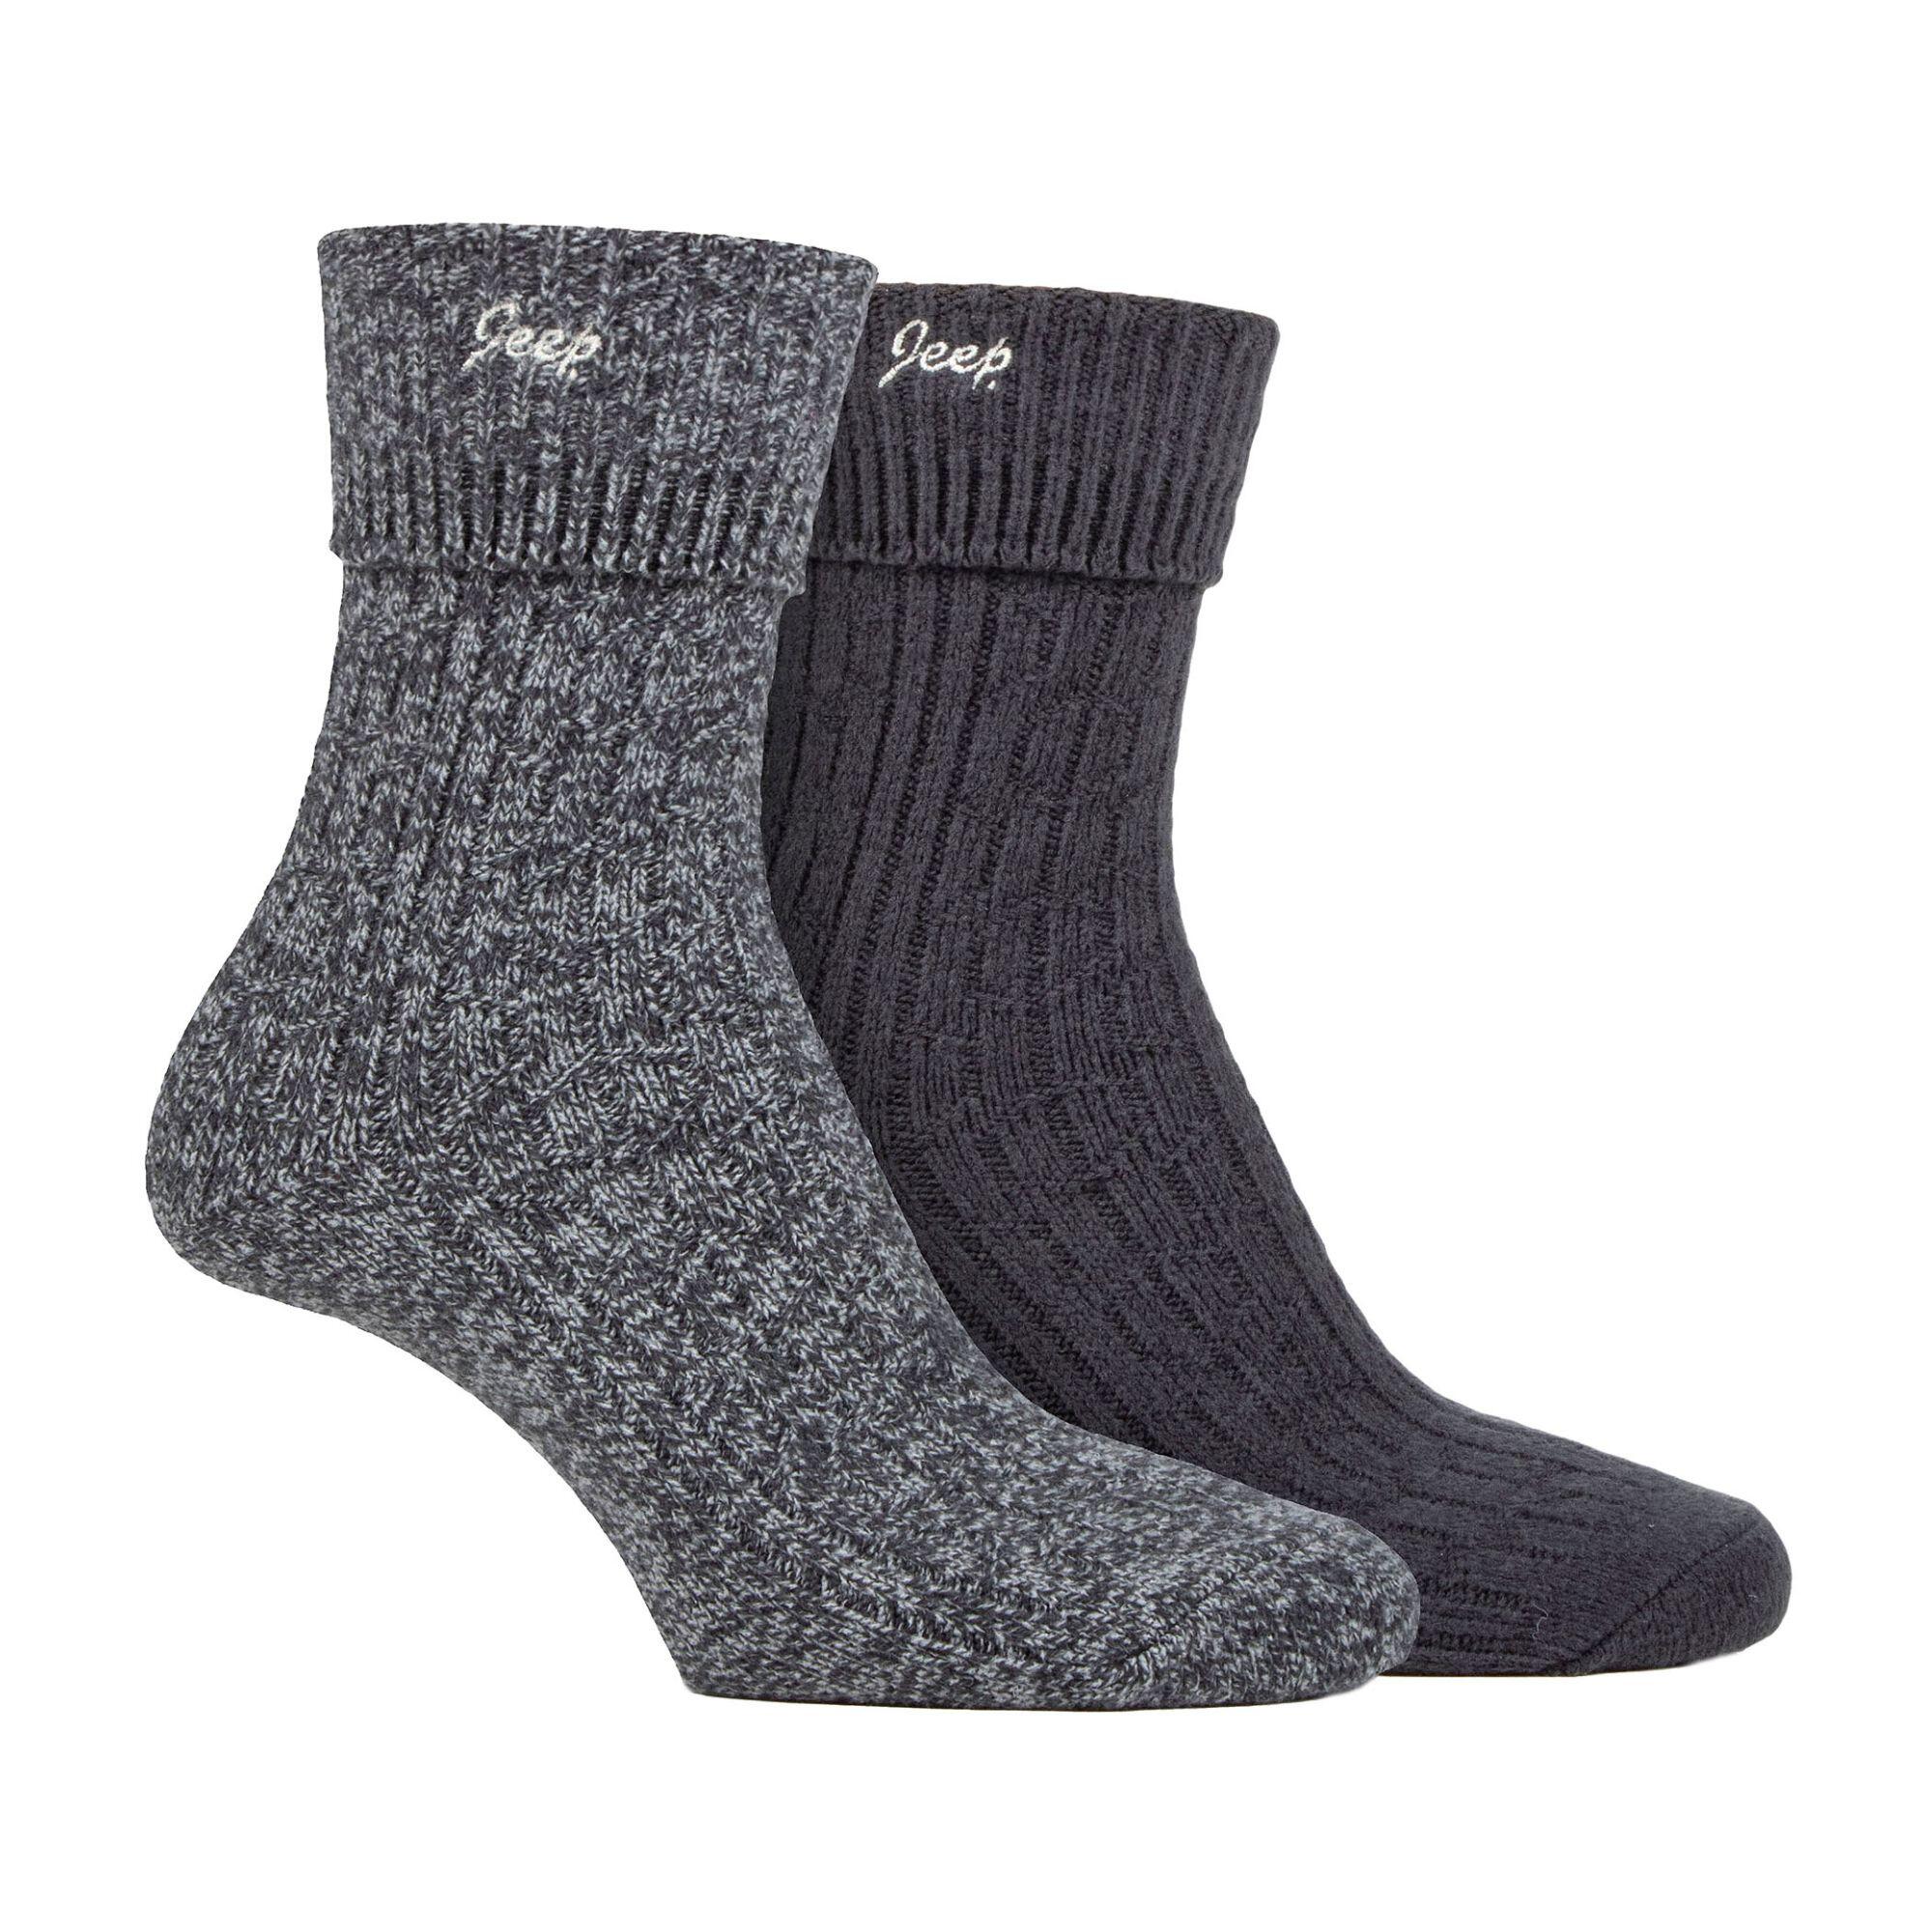 JEEP Ladies Turn Cuff Walking Boot Comfortable Performance Polyester Socks